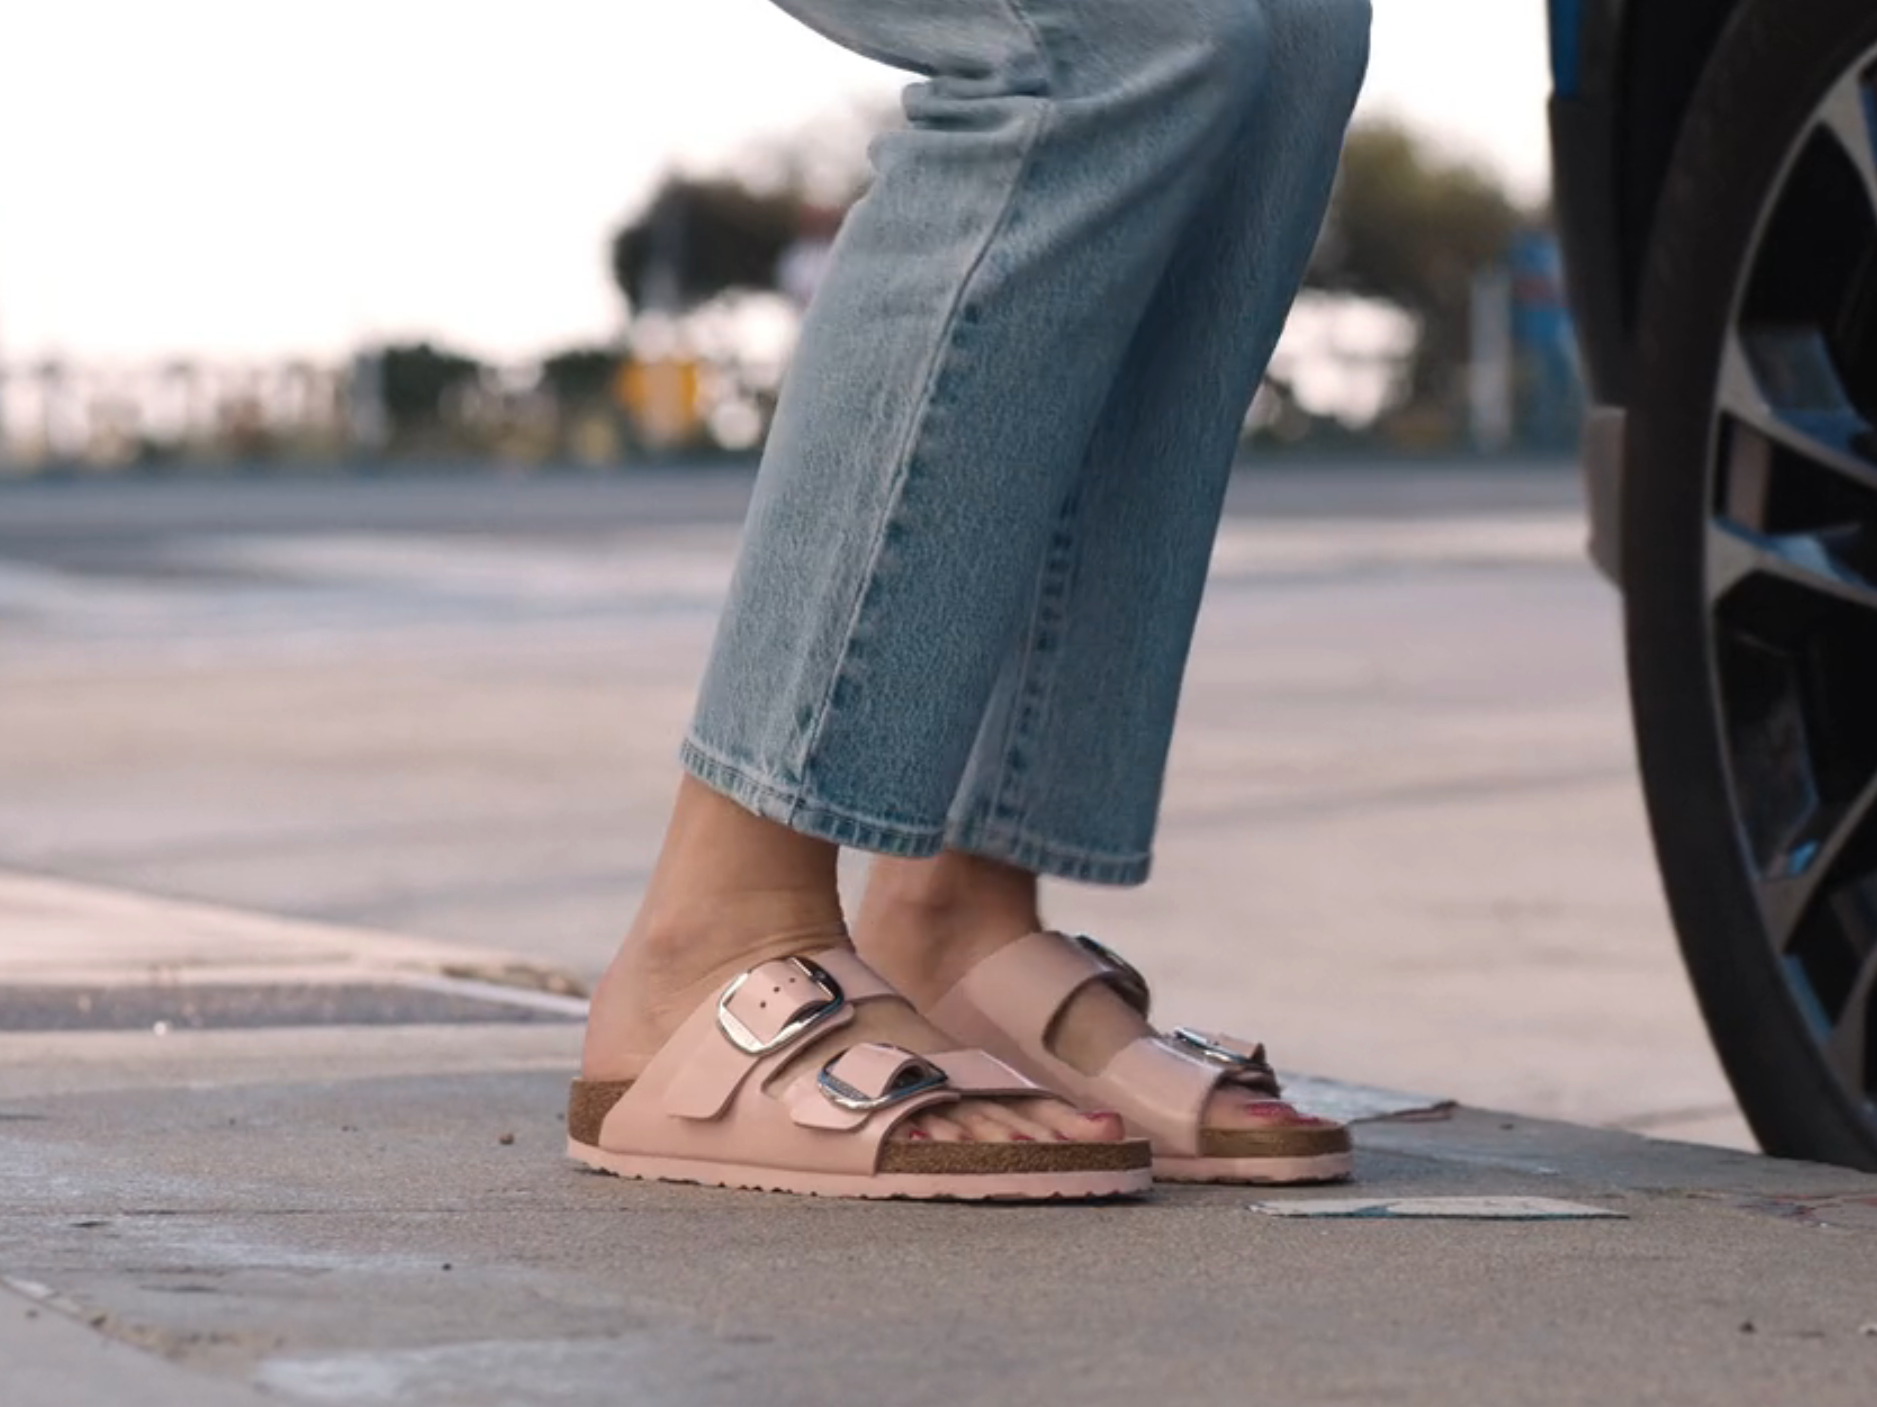 barbie&#39;s feet as she steps out of a car, she&#39;s wearing birkenstocks